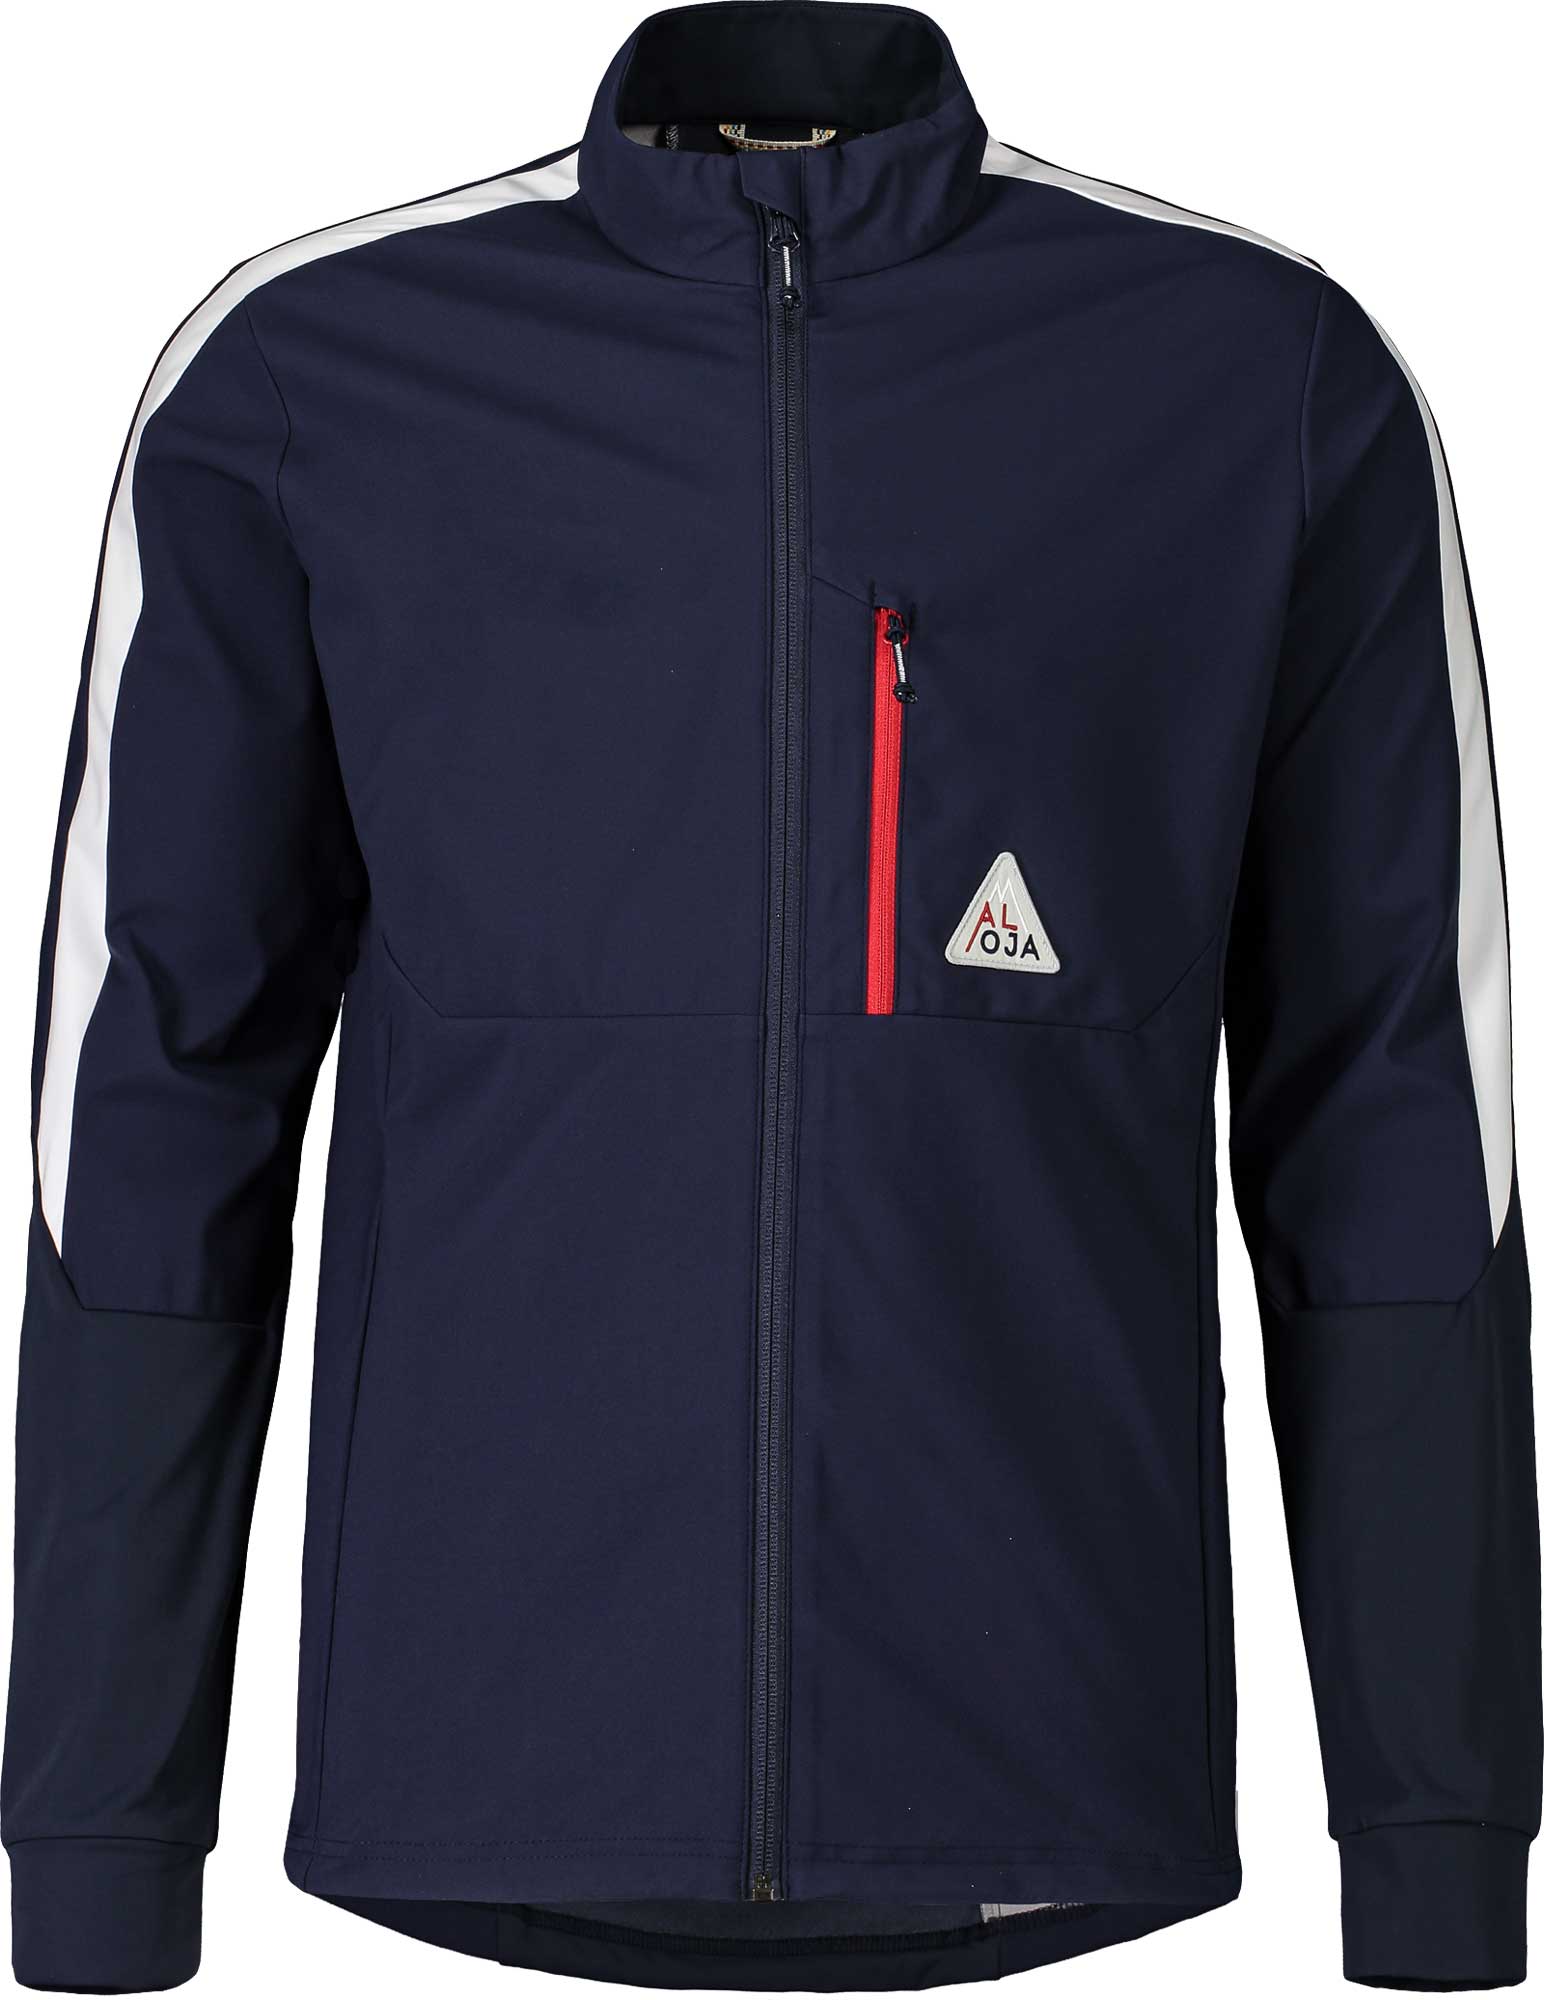 Nordic ski jacket